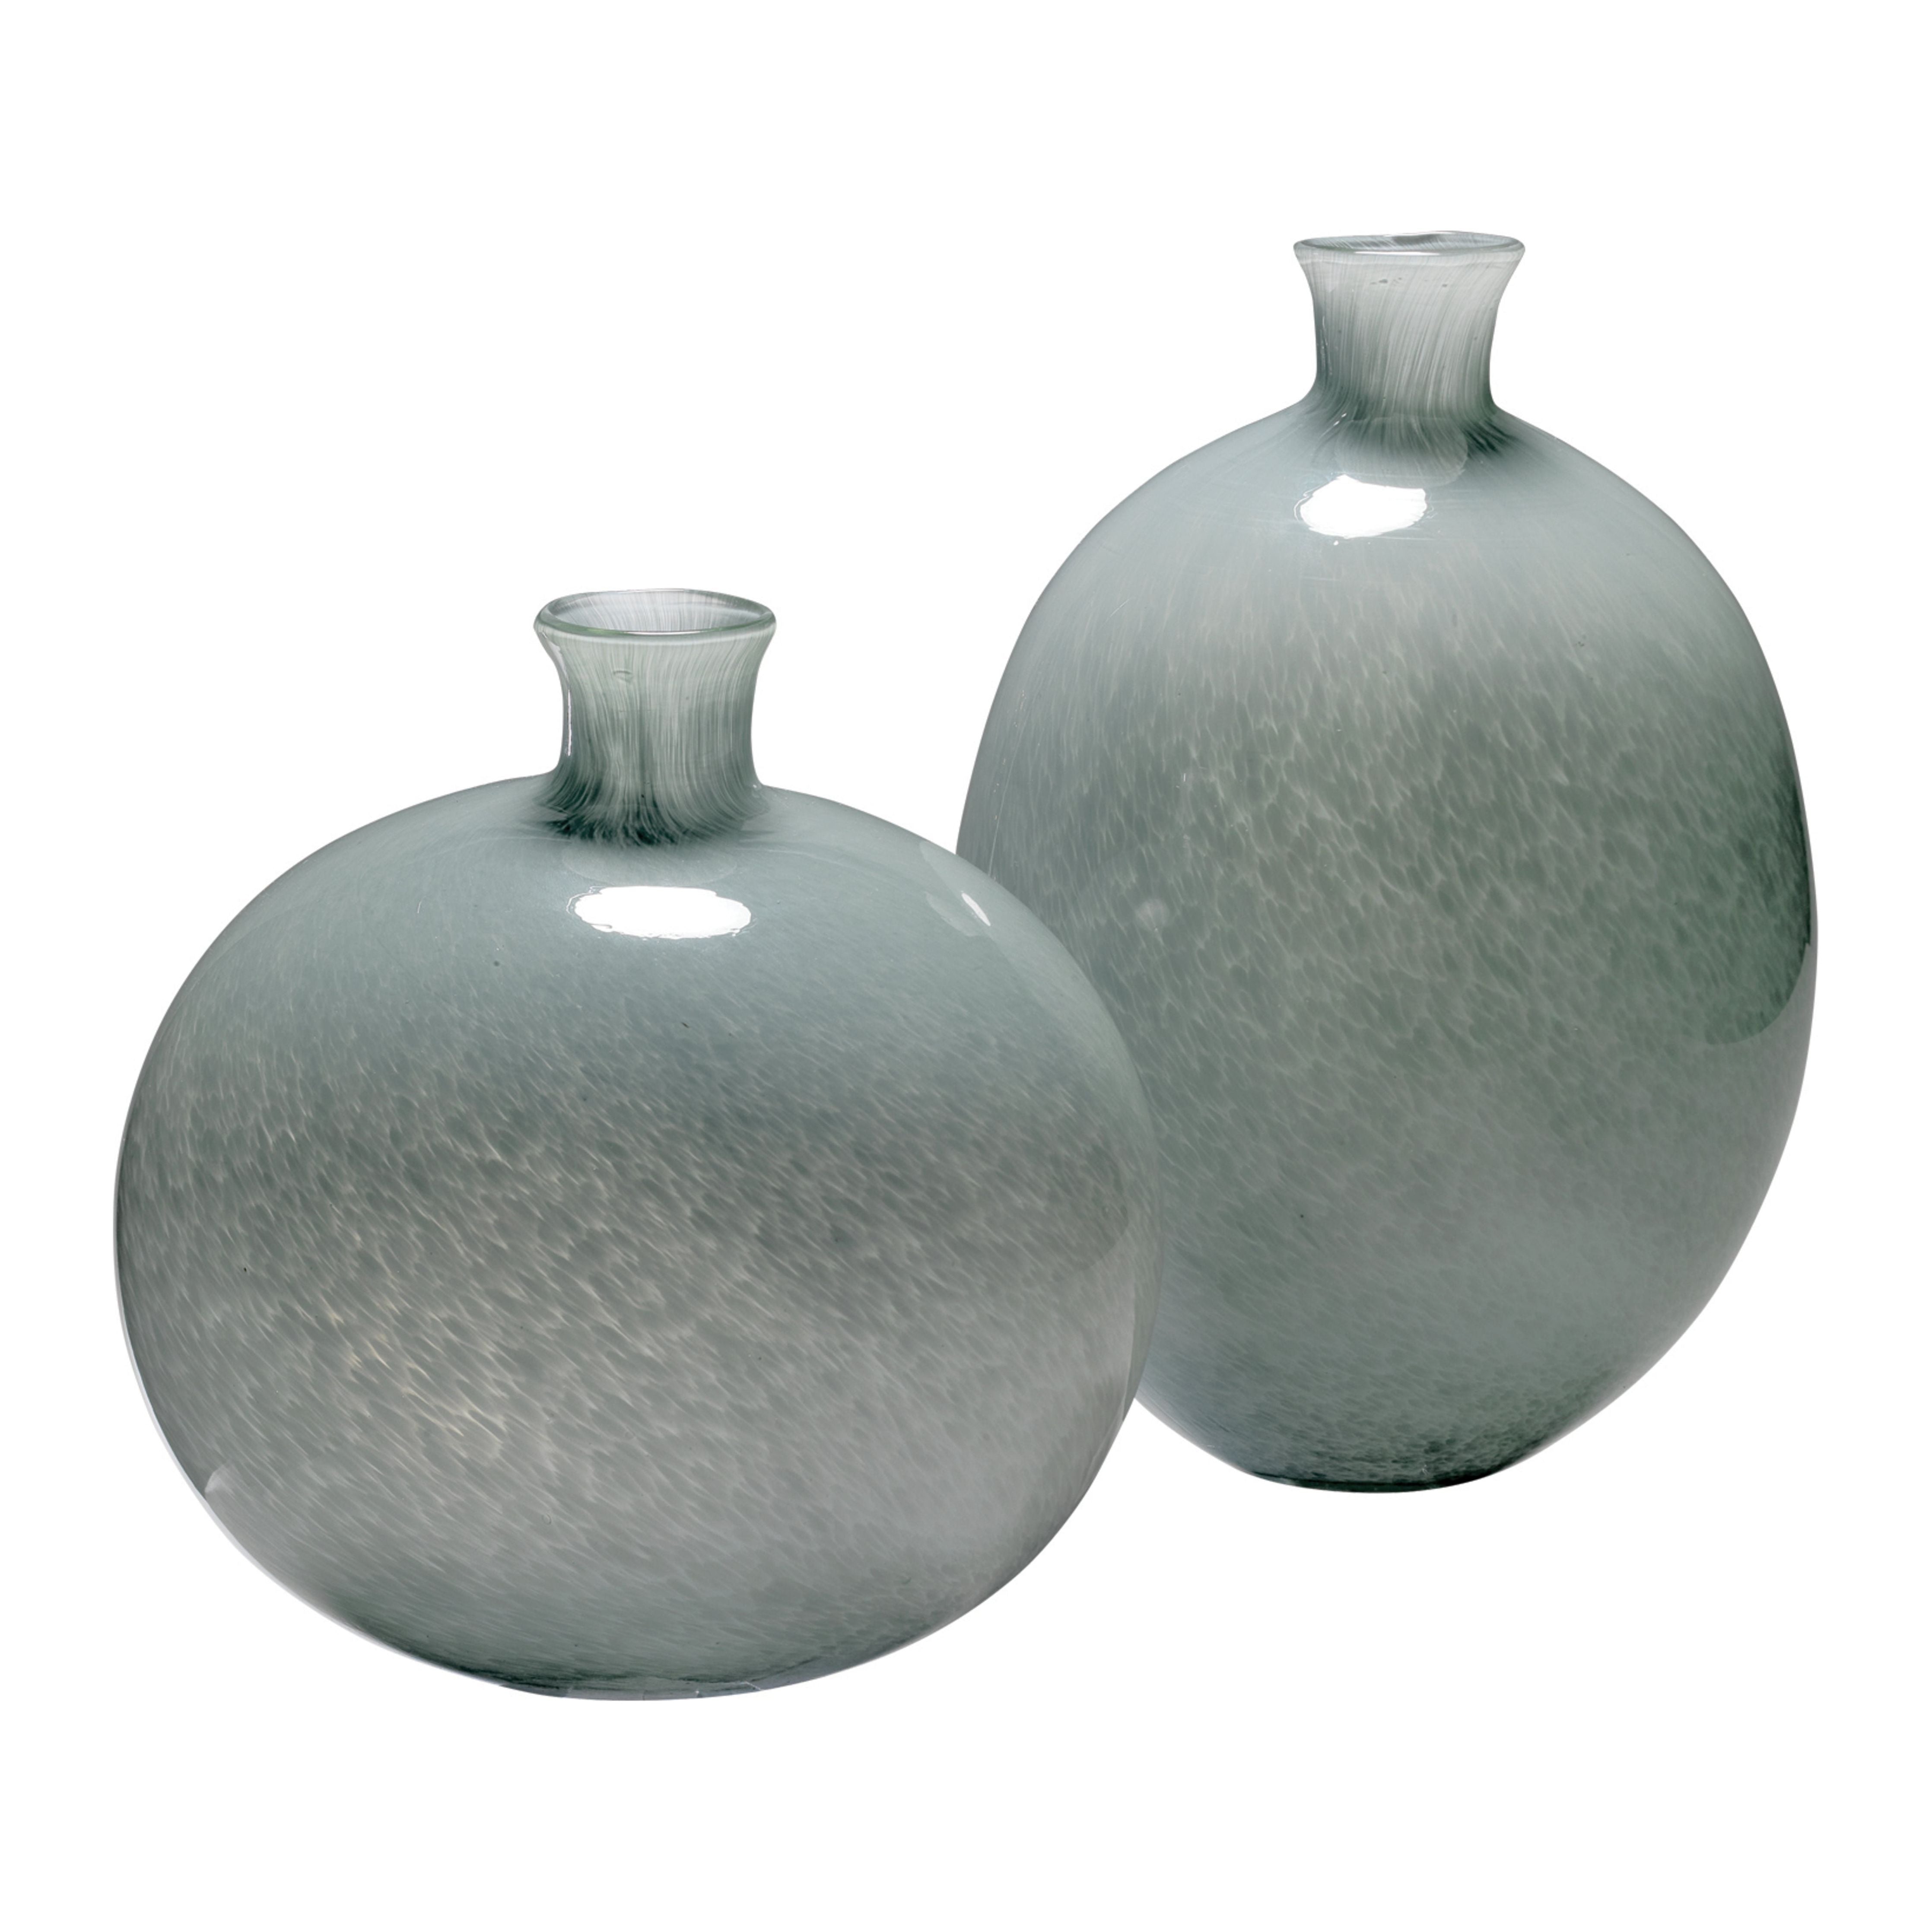 Jamie Young Company - 7MINX-VAGR - Minx Decorative Vases (set of 2) - Minx - Grey